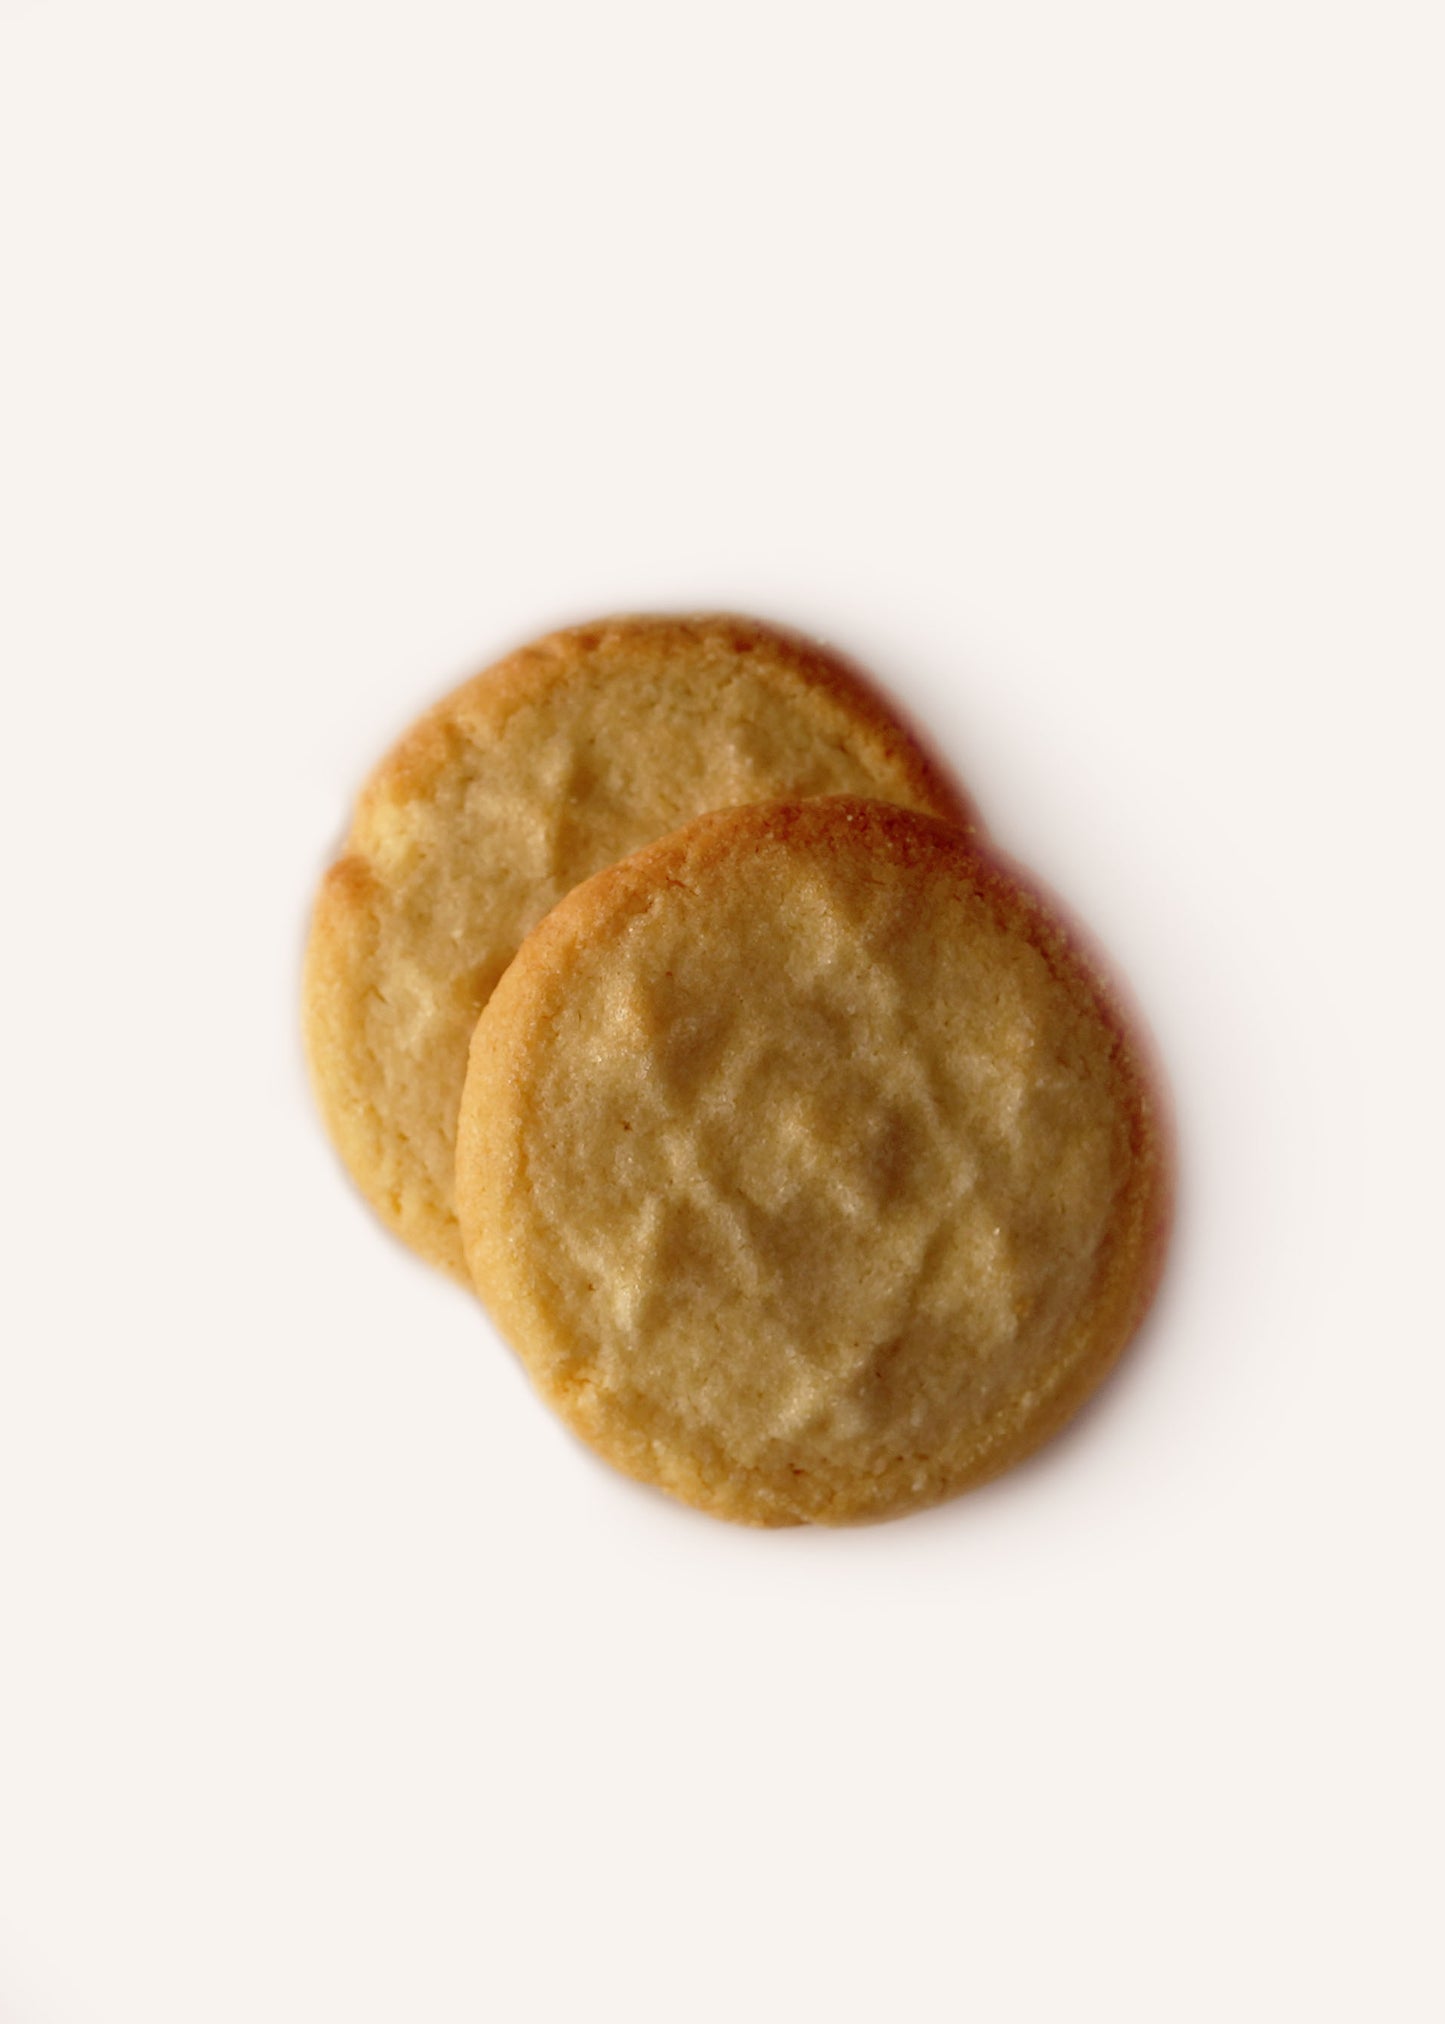 Shortbread Cookies - Original